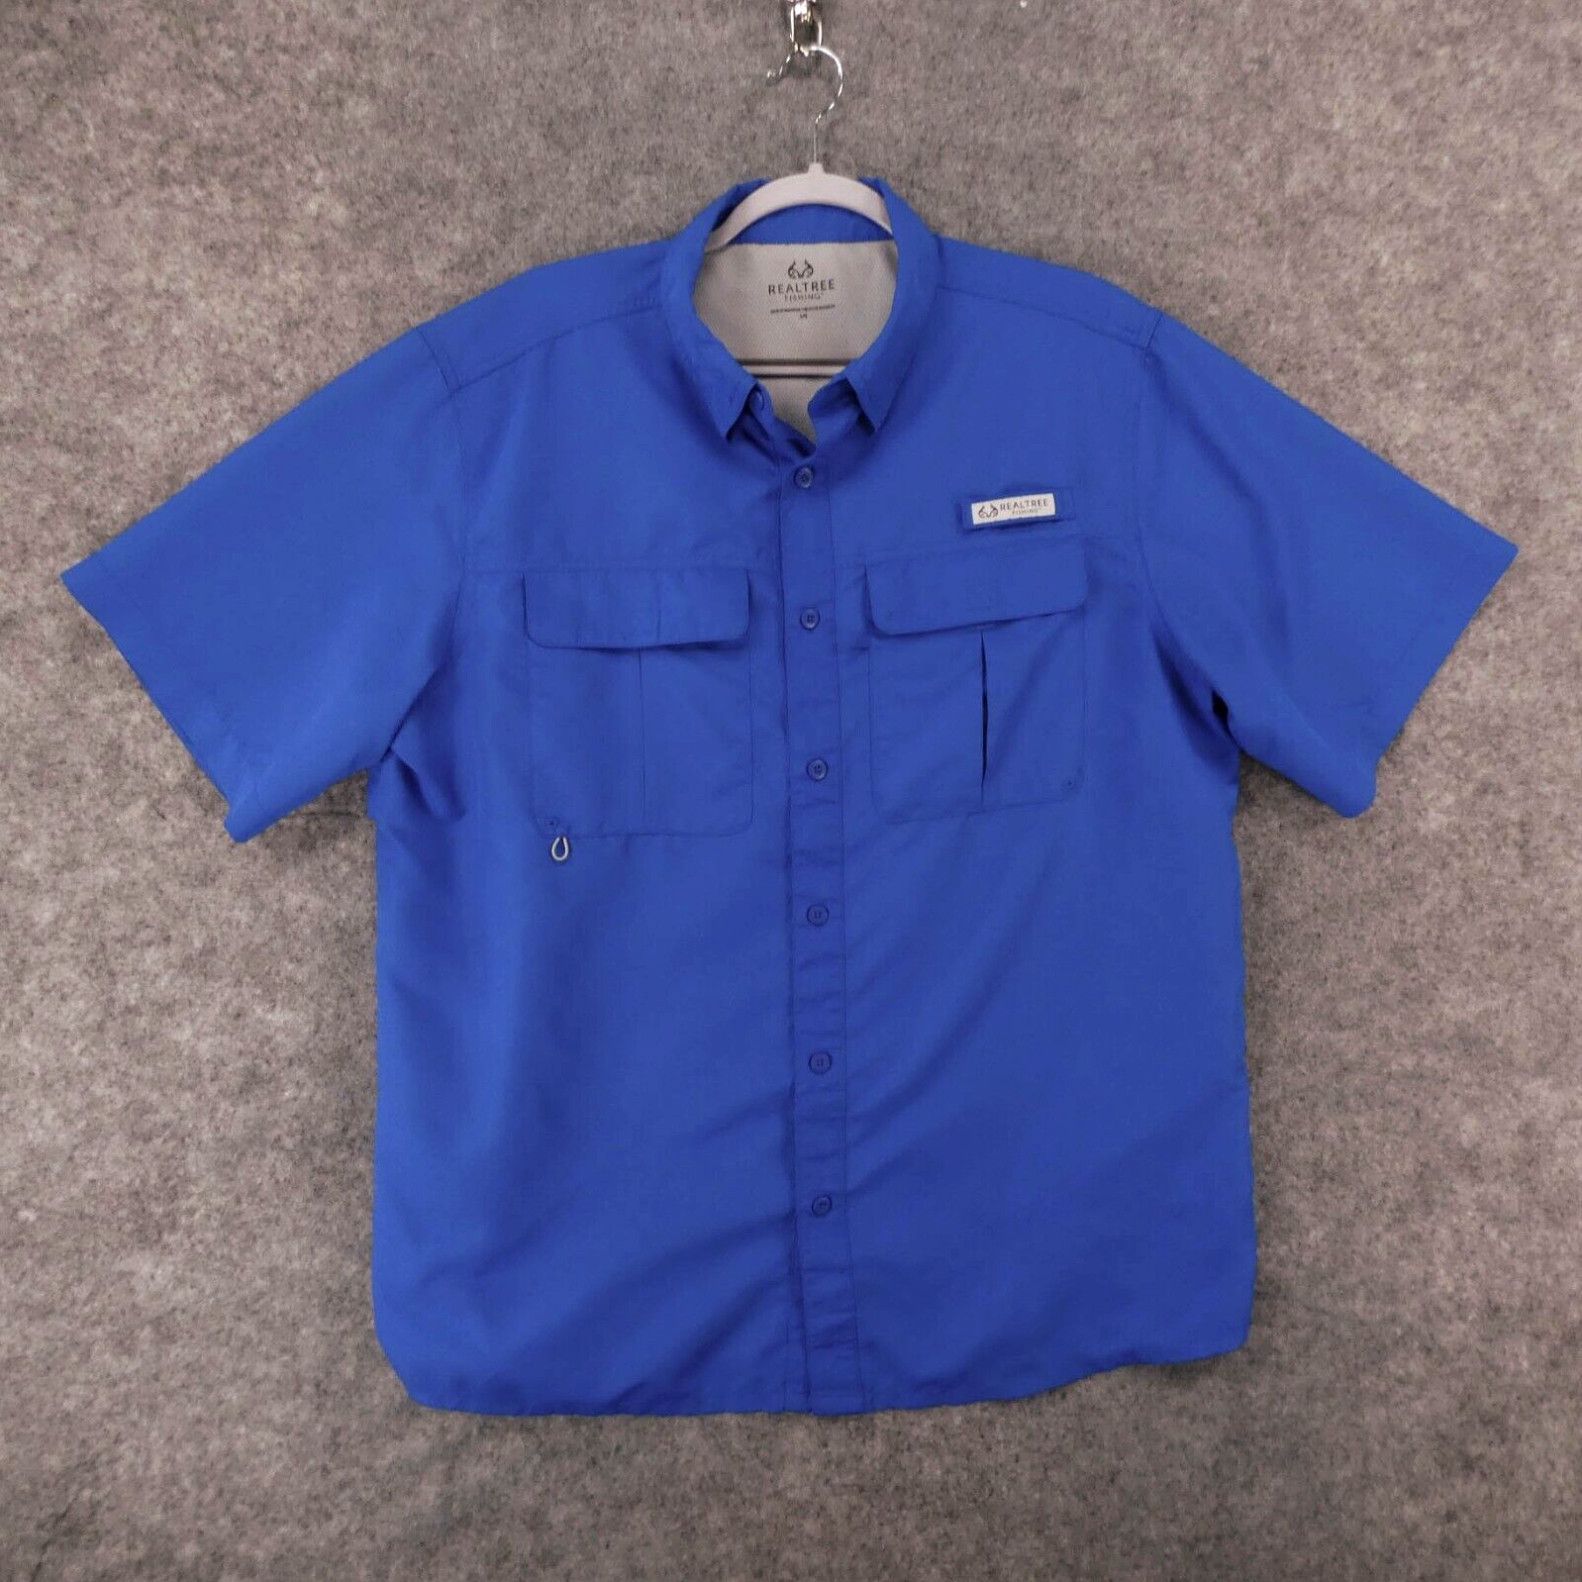 Realtree fishing shirt blue - Gem